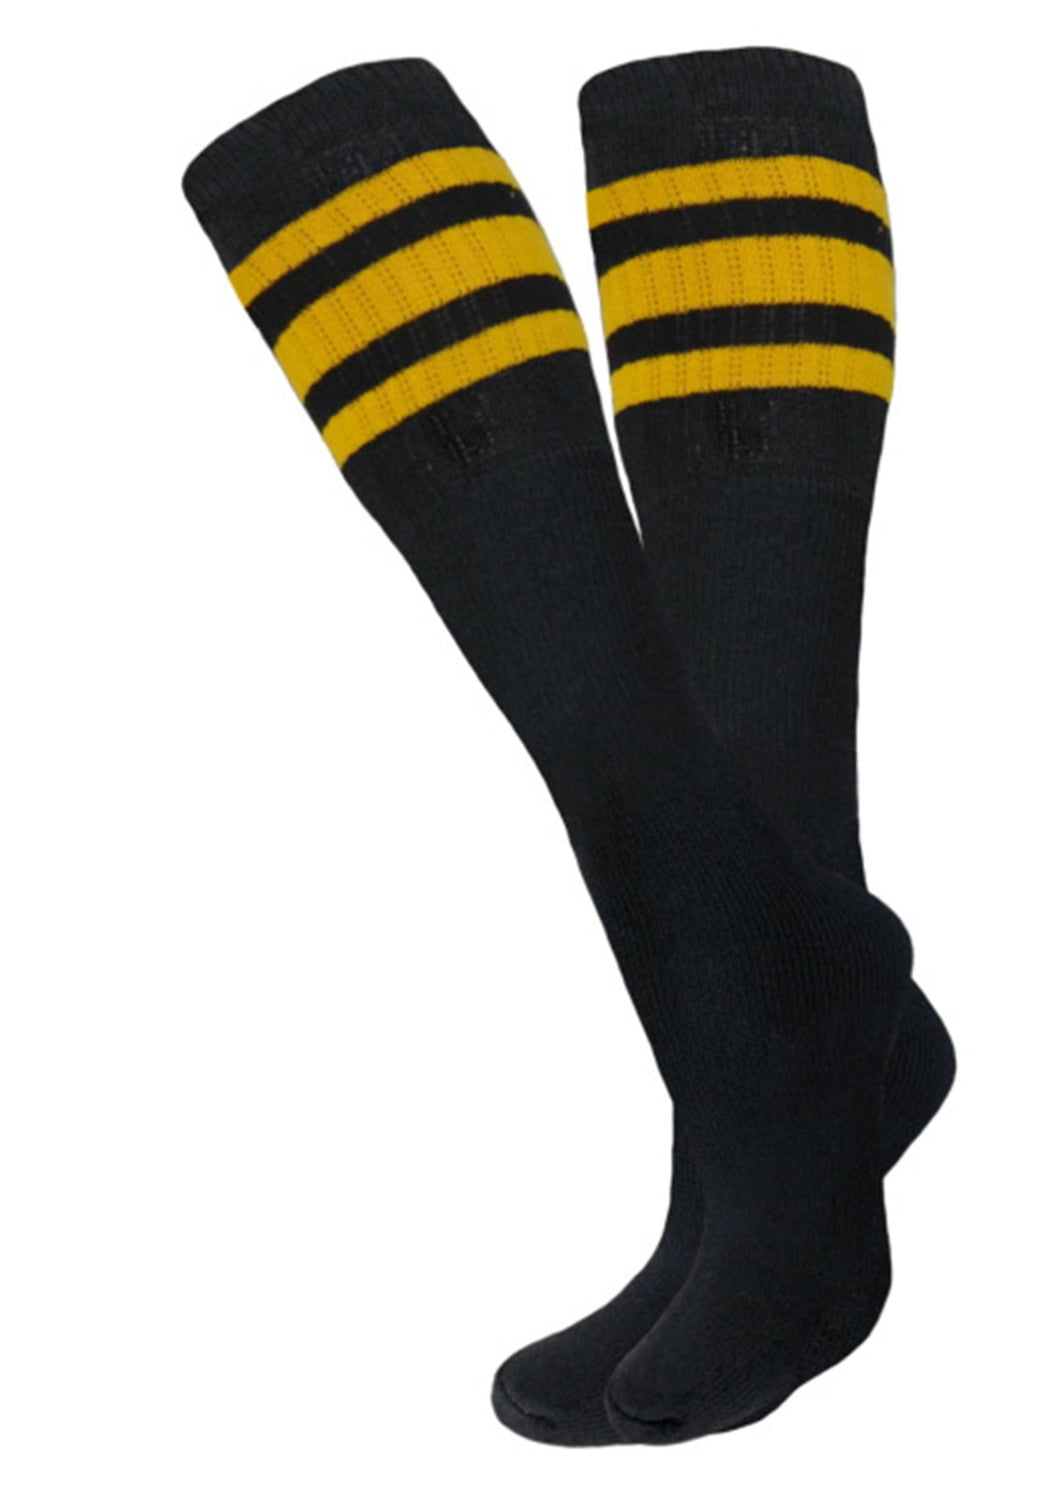 Tube Socks 3 OR 6 Pair Pack - Black Yellow